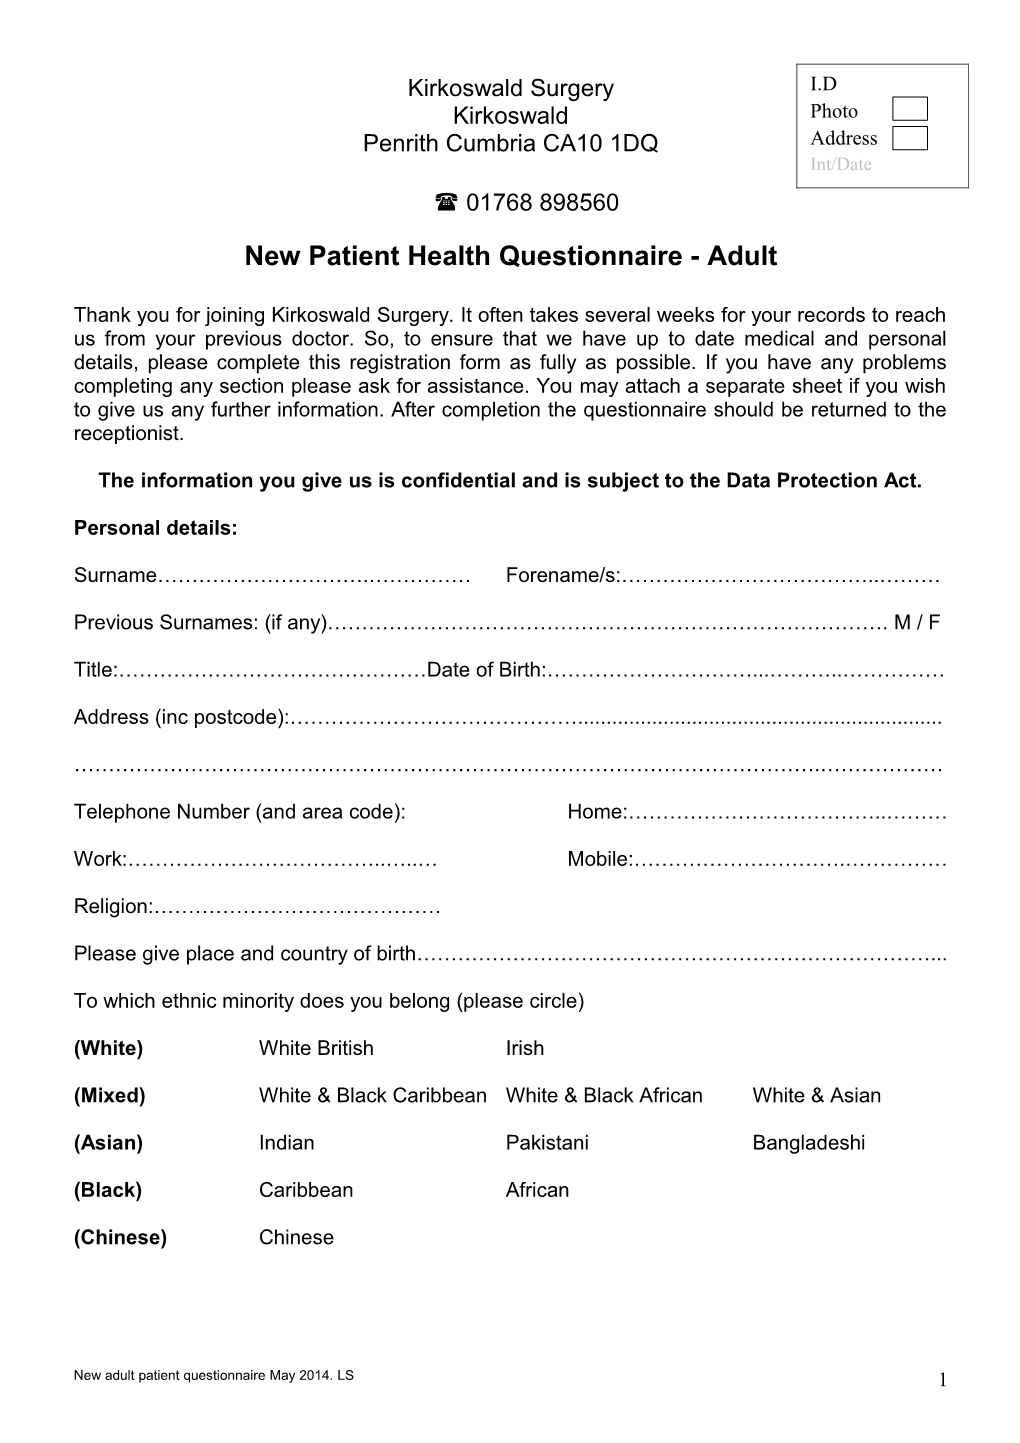 New Patient Health Questionnaire - Adult